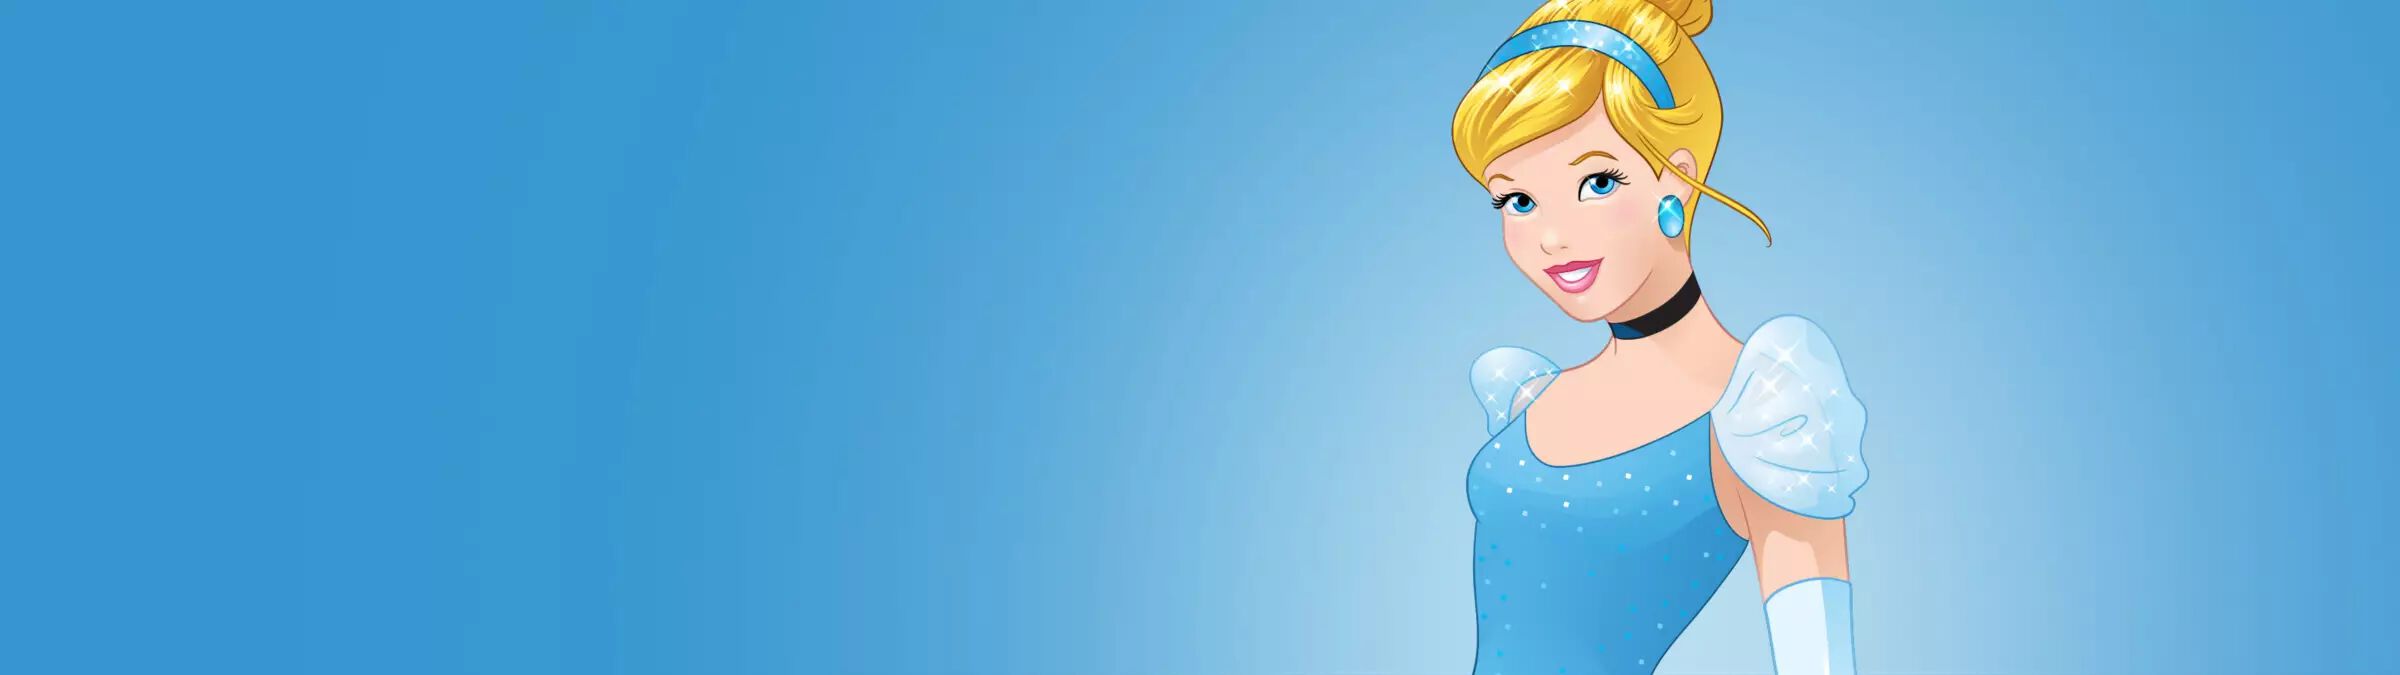 Cinderella Character Banner